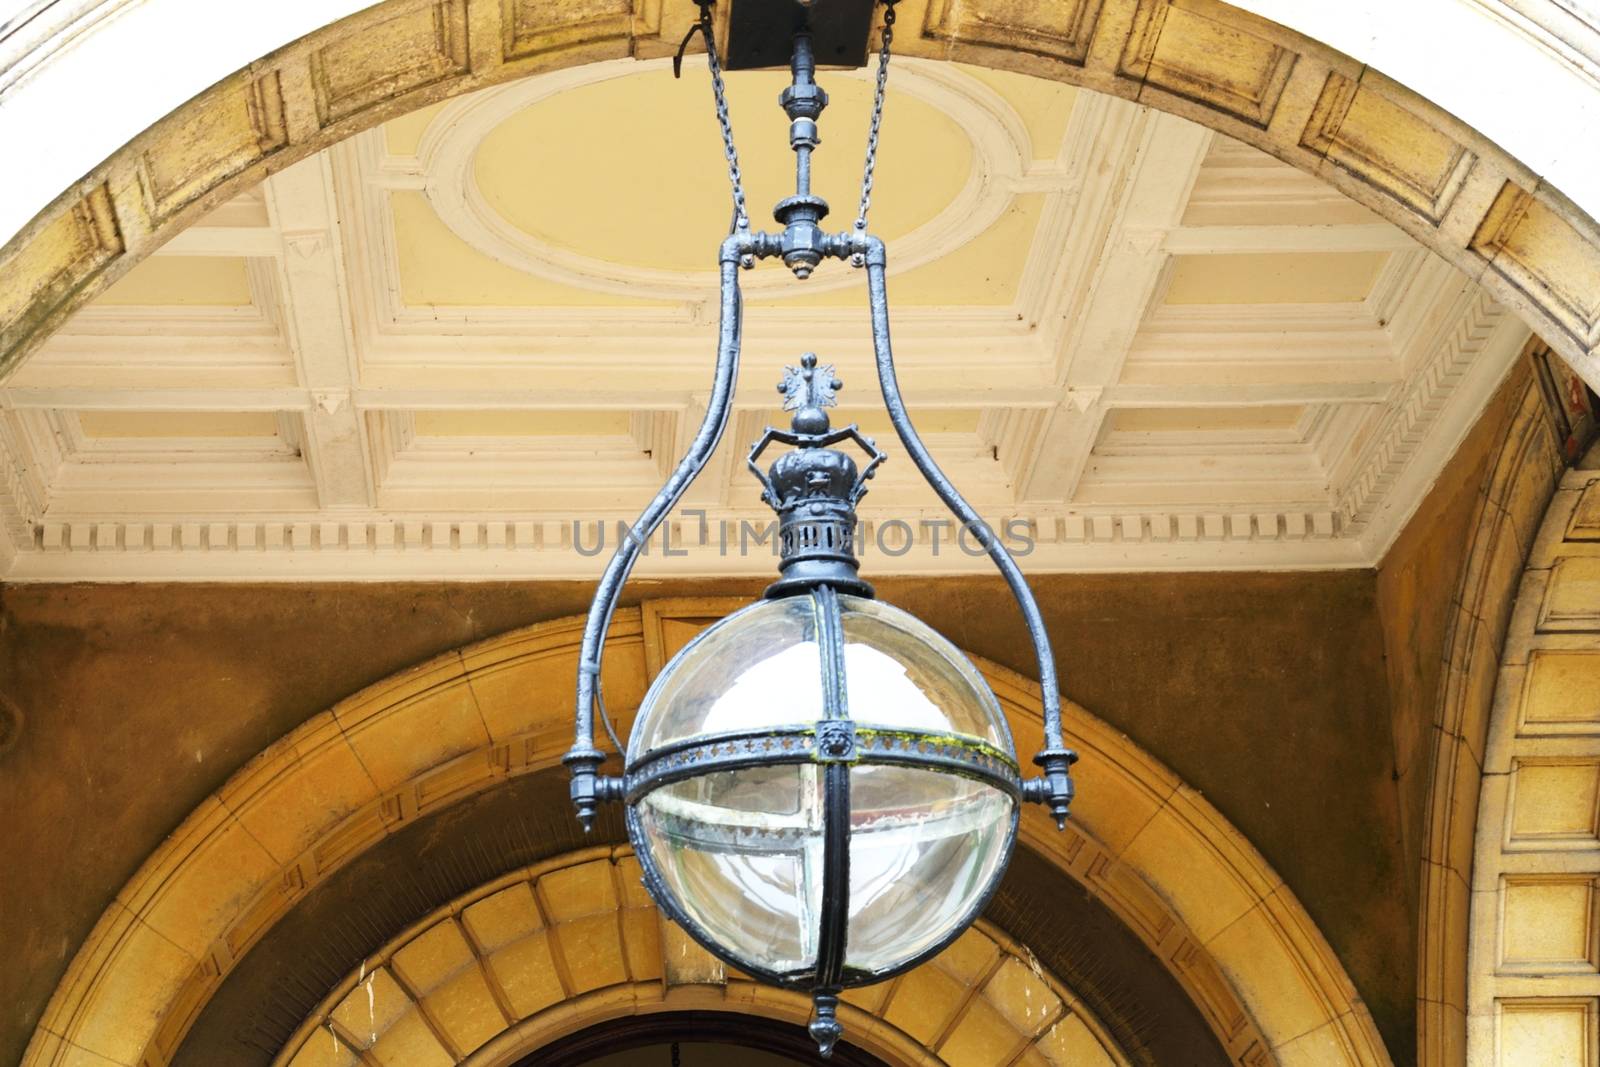 Large Globe light above entrance  by pauws99